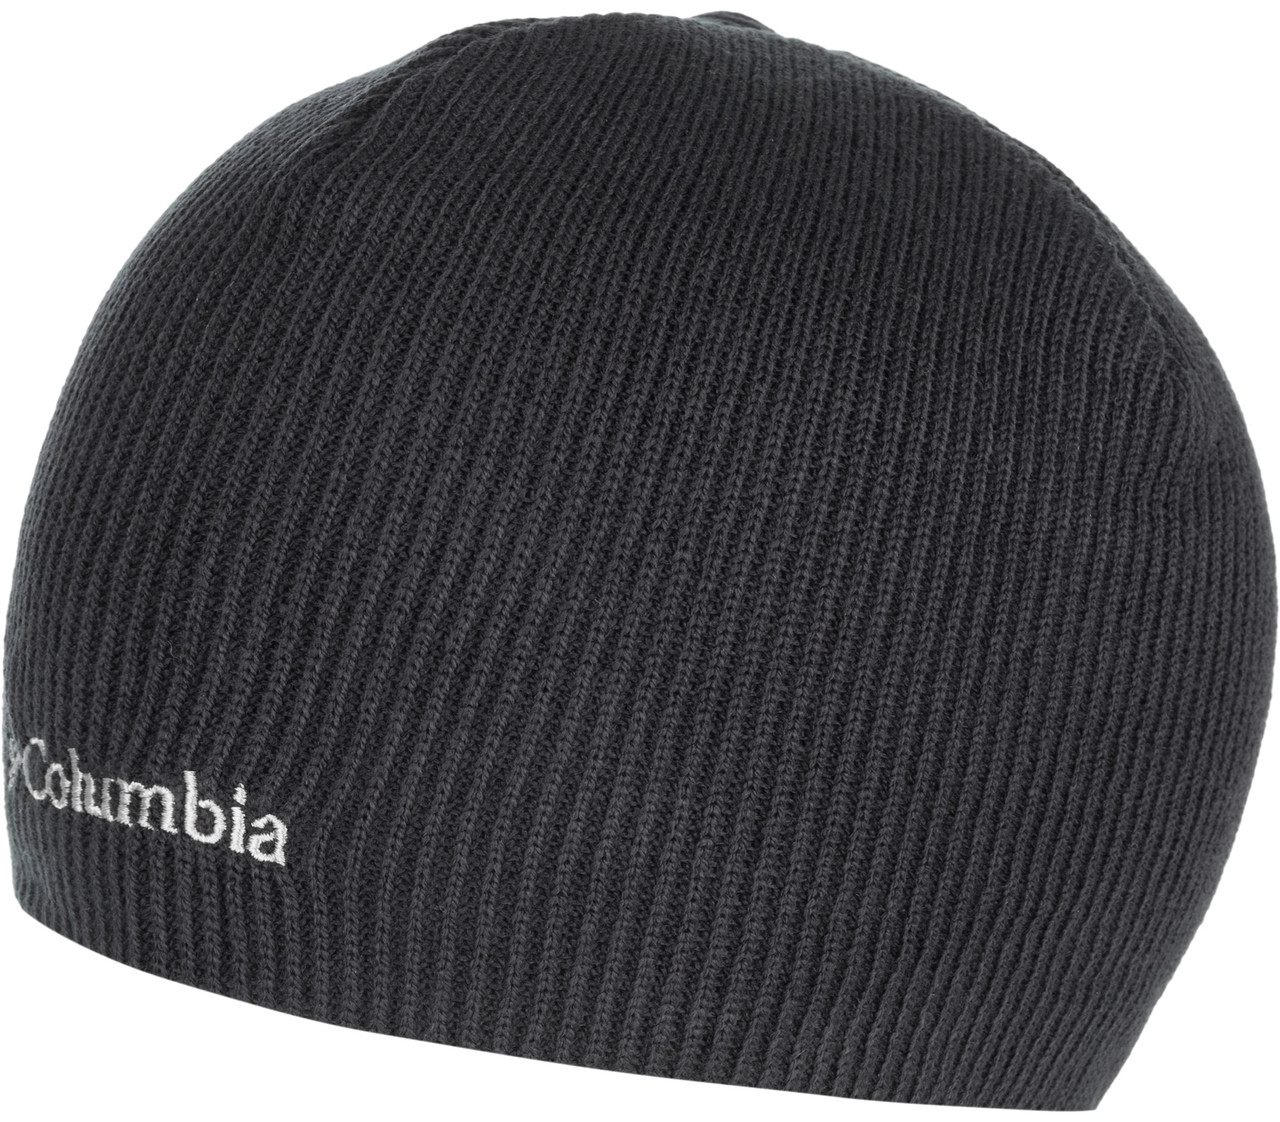 Чорна спортивна шапка Columbia Whirlibird Watch Код 1185181CLB-014